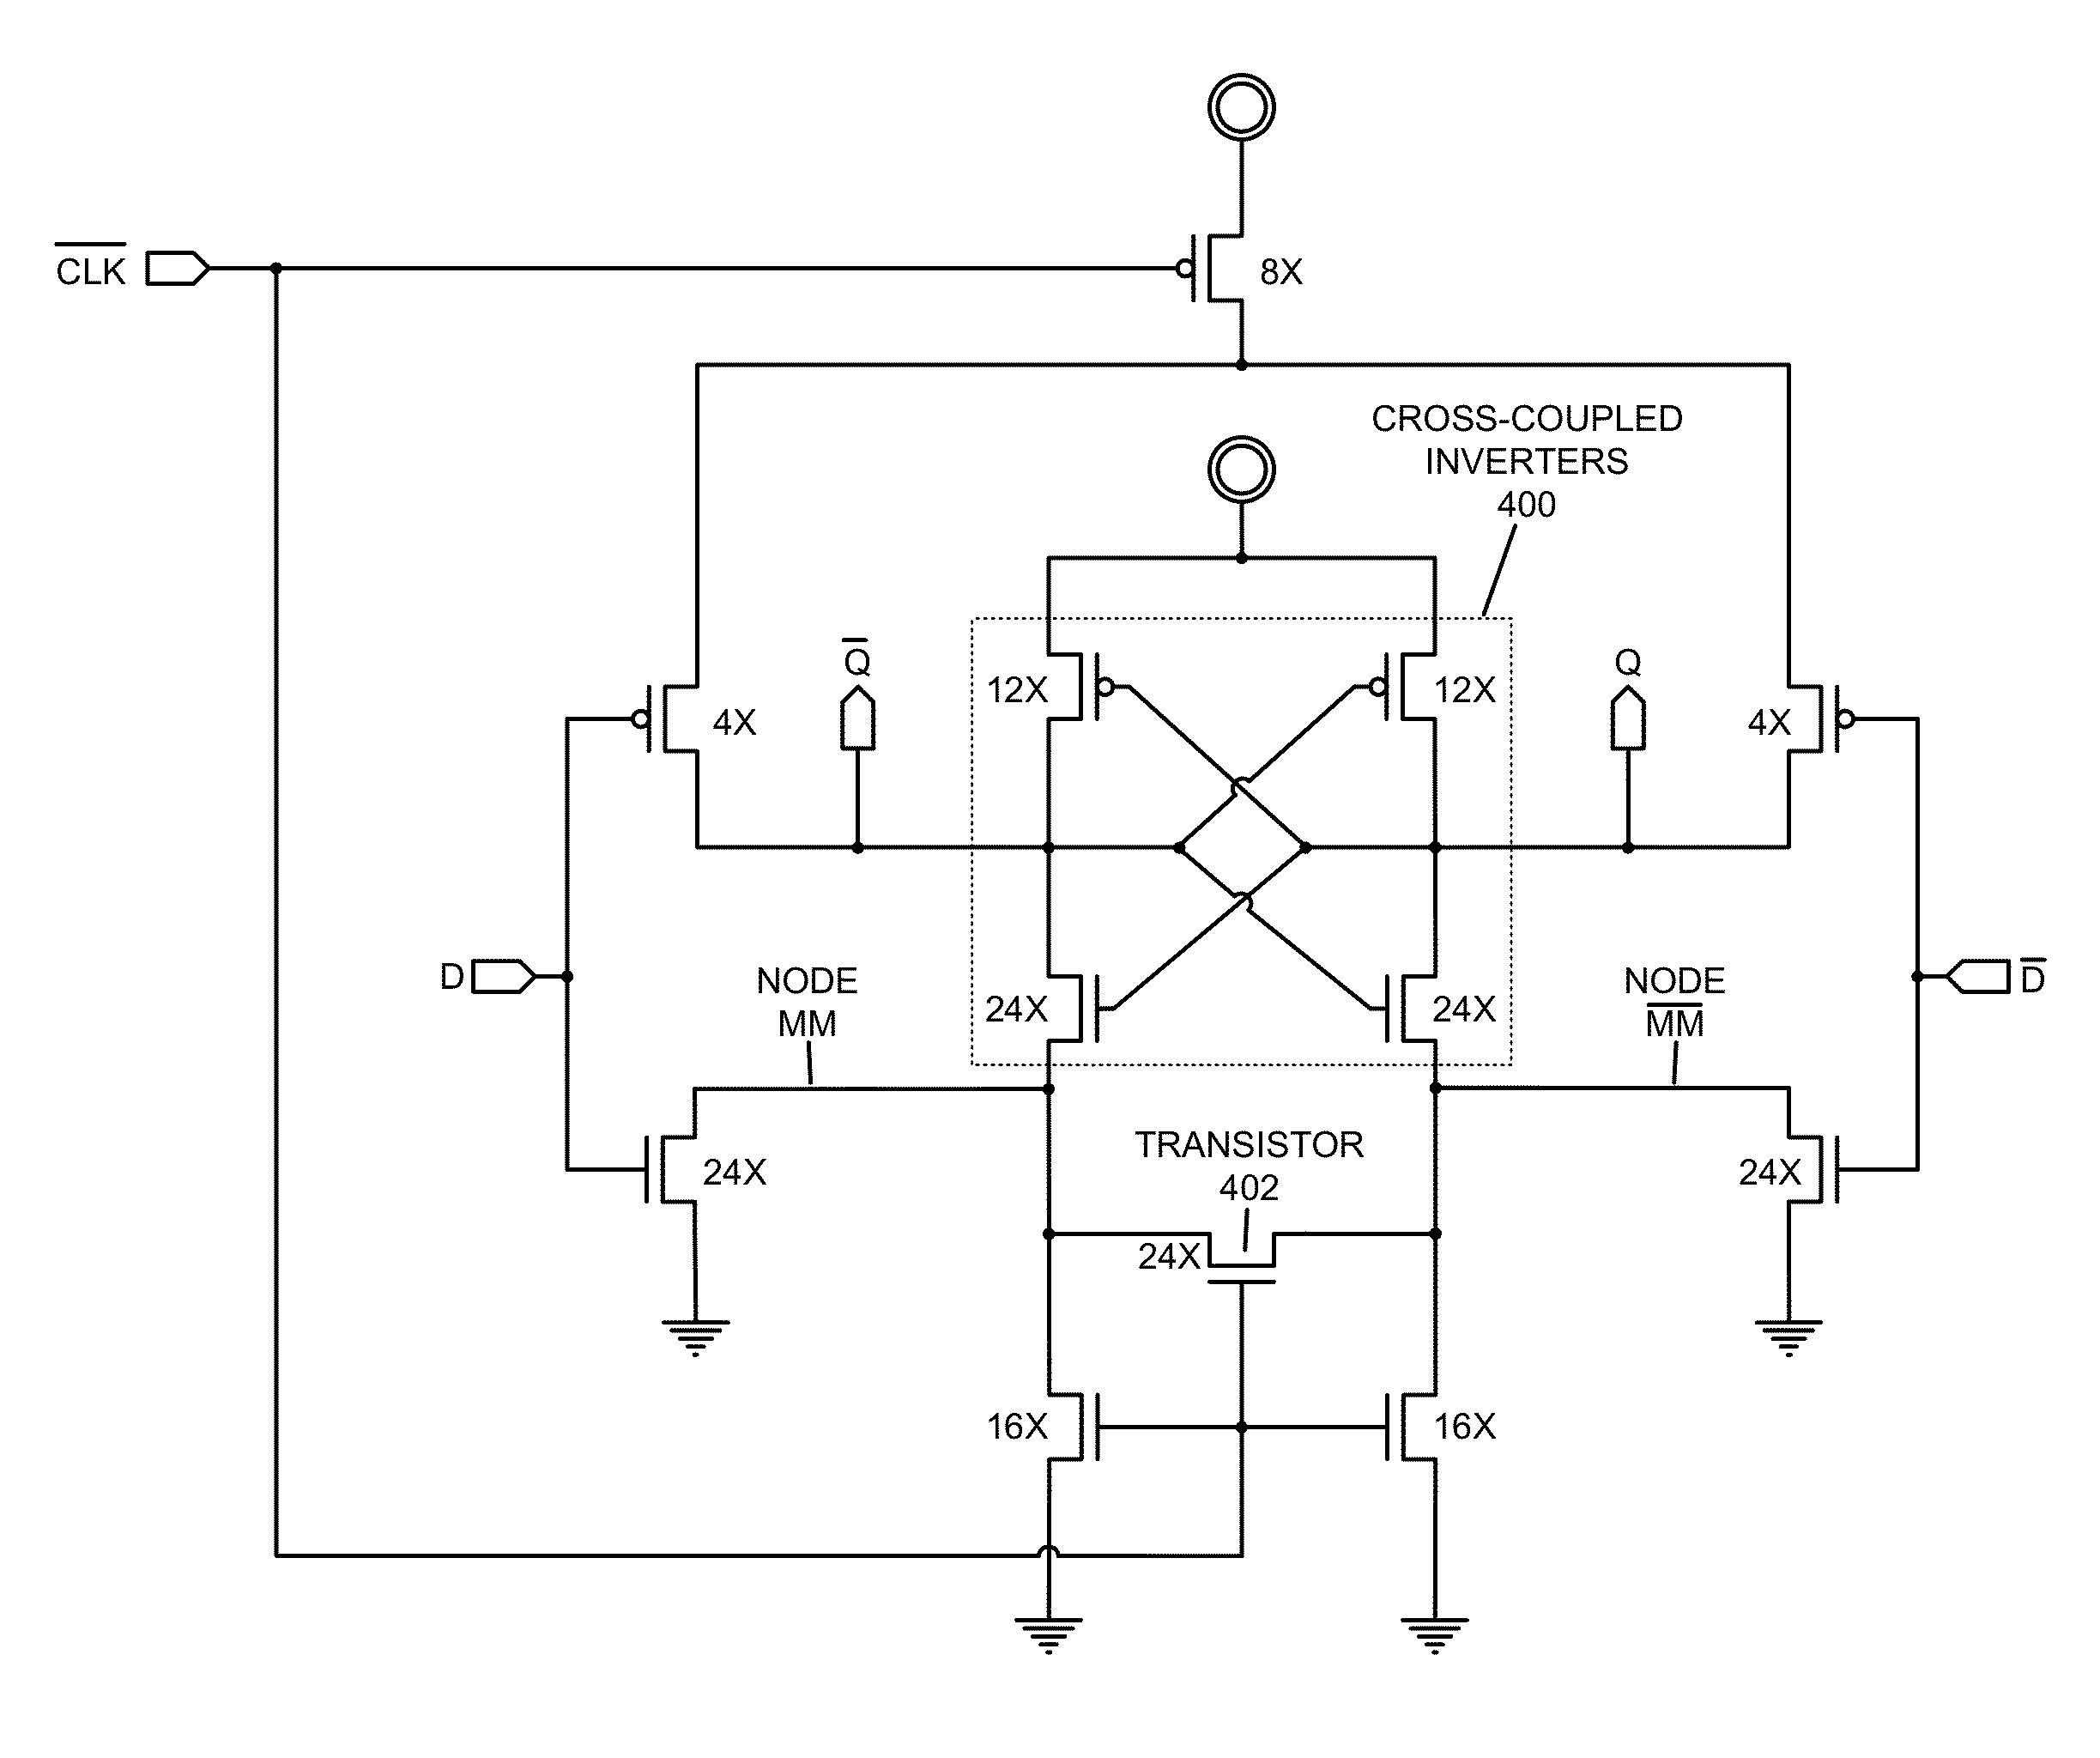 Synchronizer latch circuit that facilitates resolving metastability